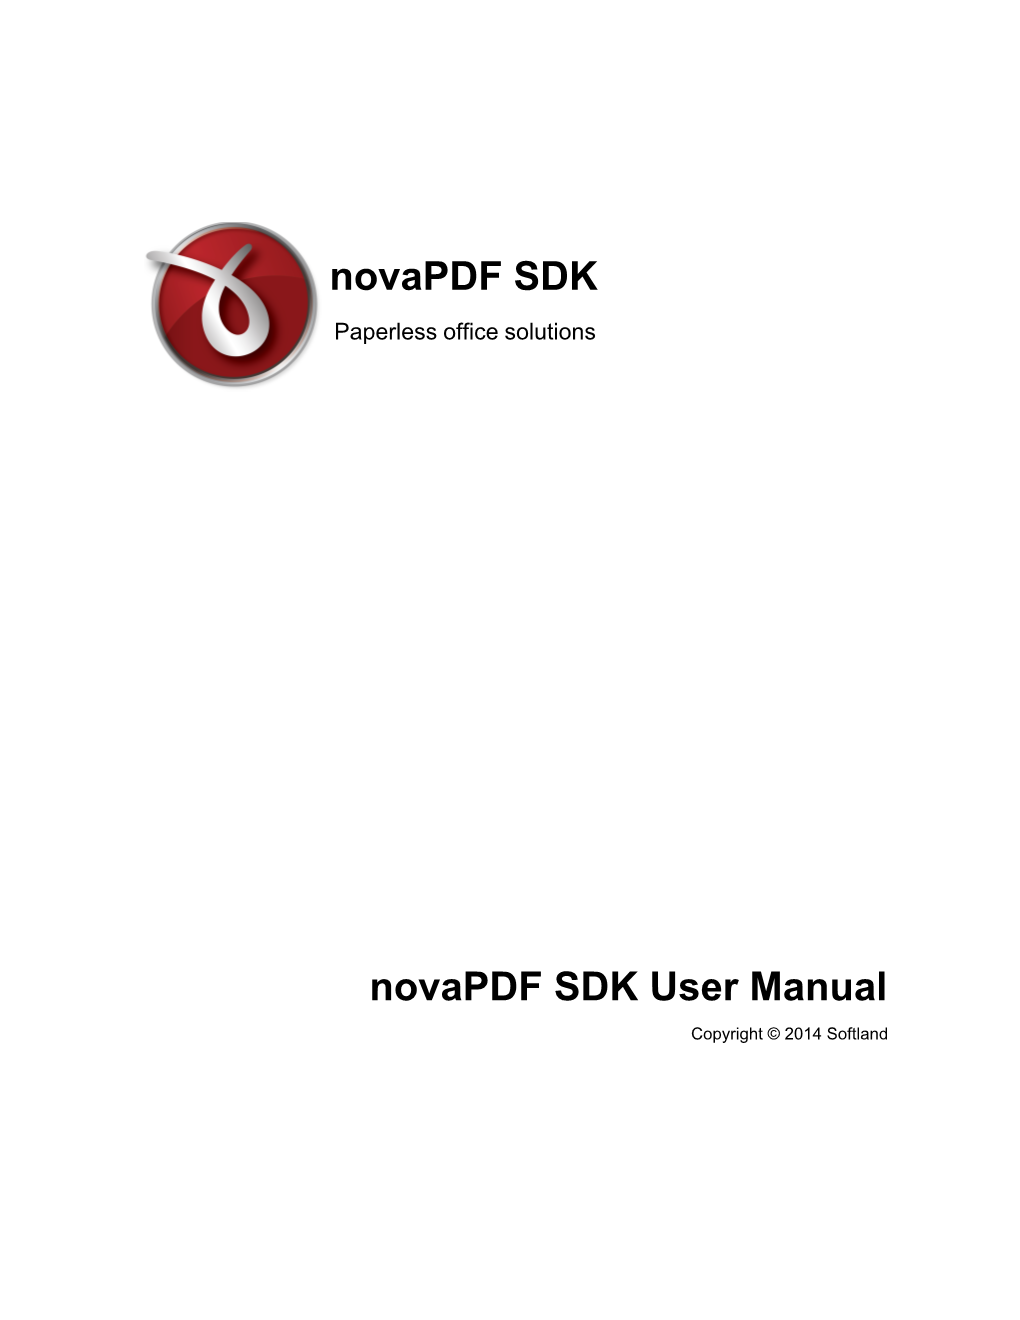 Novapdf SDK Paperless Office Solutions